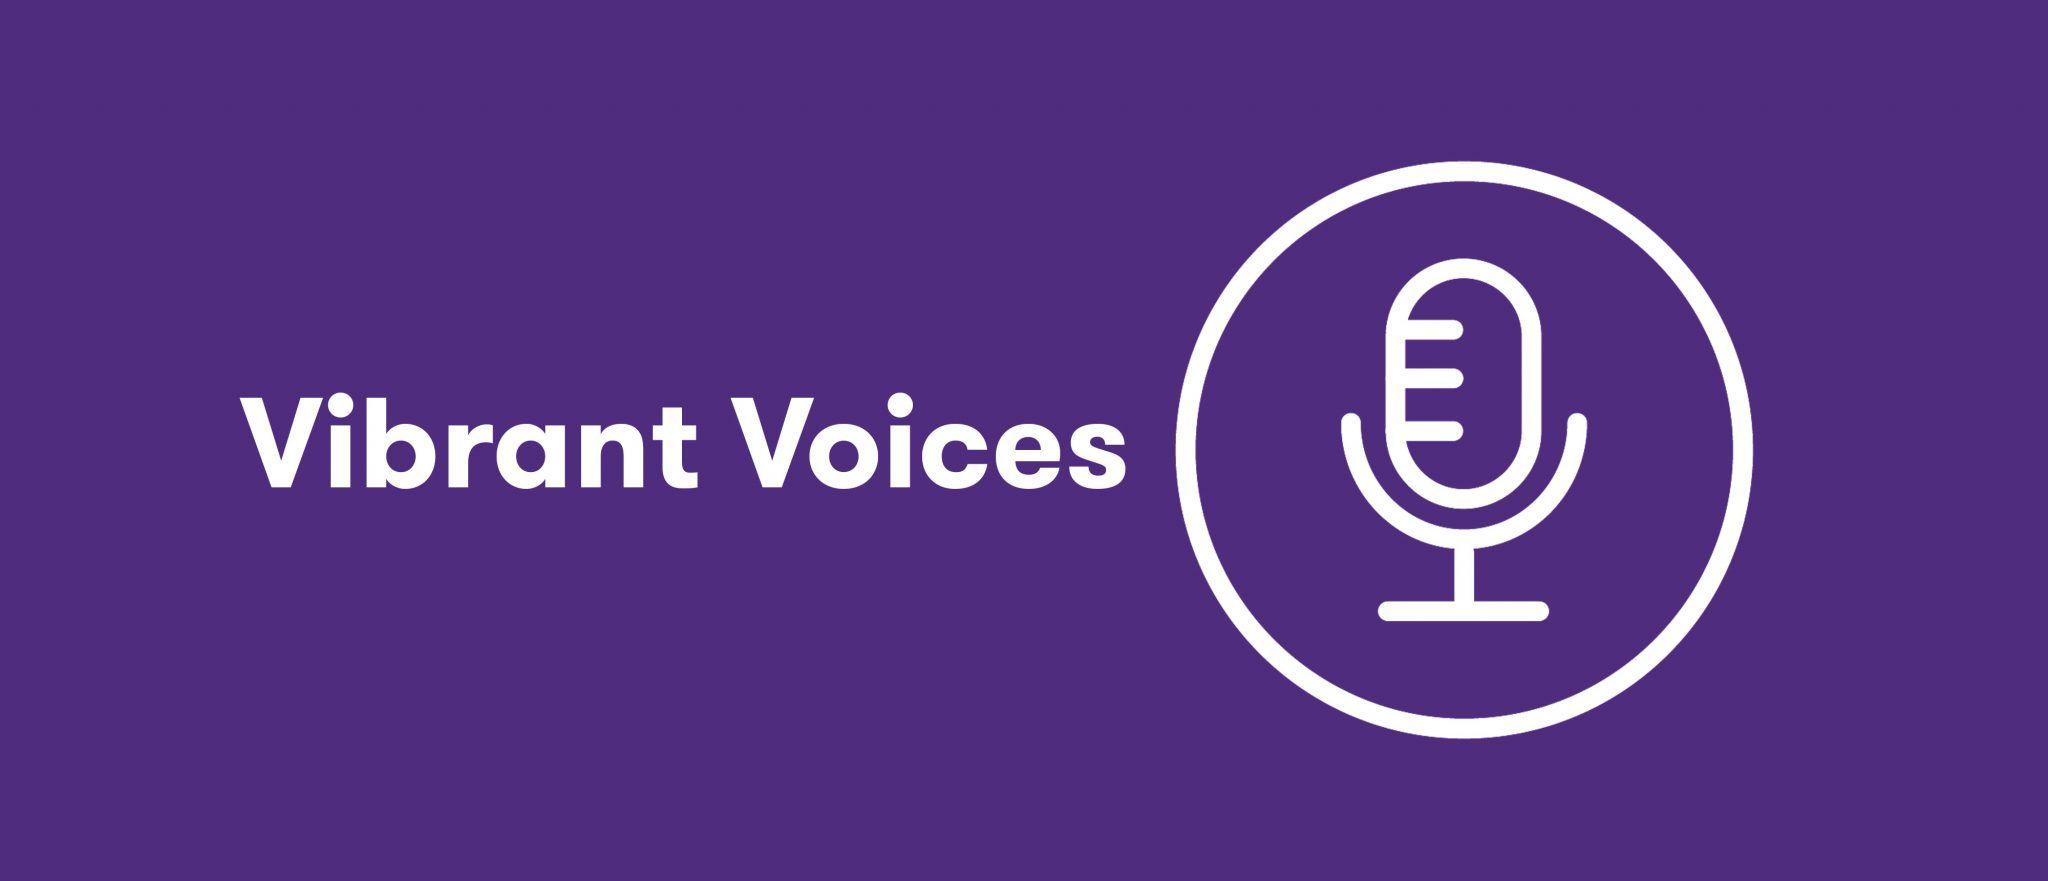 Grant Thornton Logo - Vibrant Voices - Podcasts - Faces of a Vibrant Economy - Grant Thornton